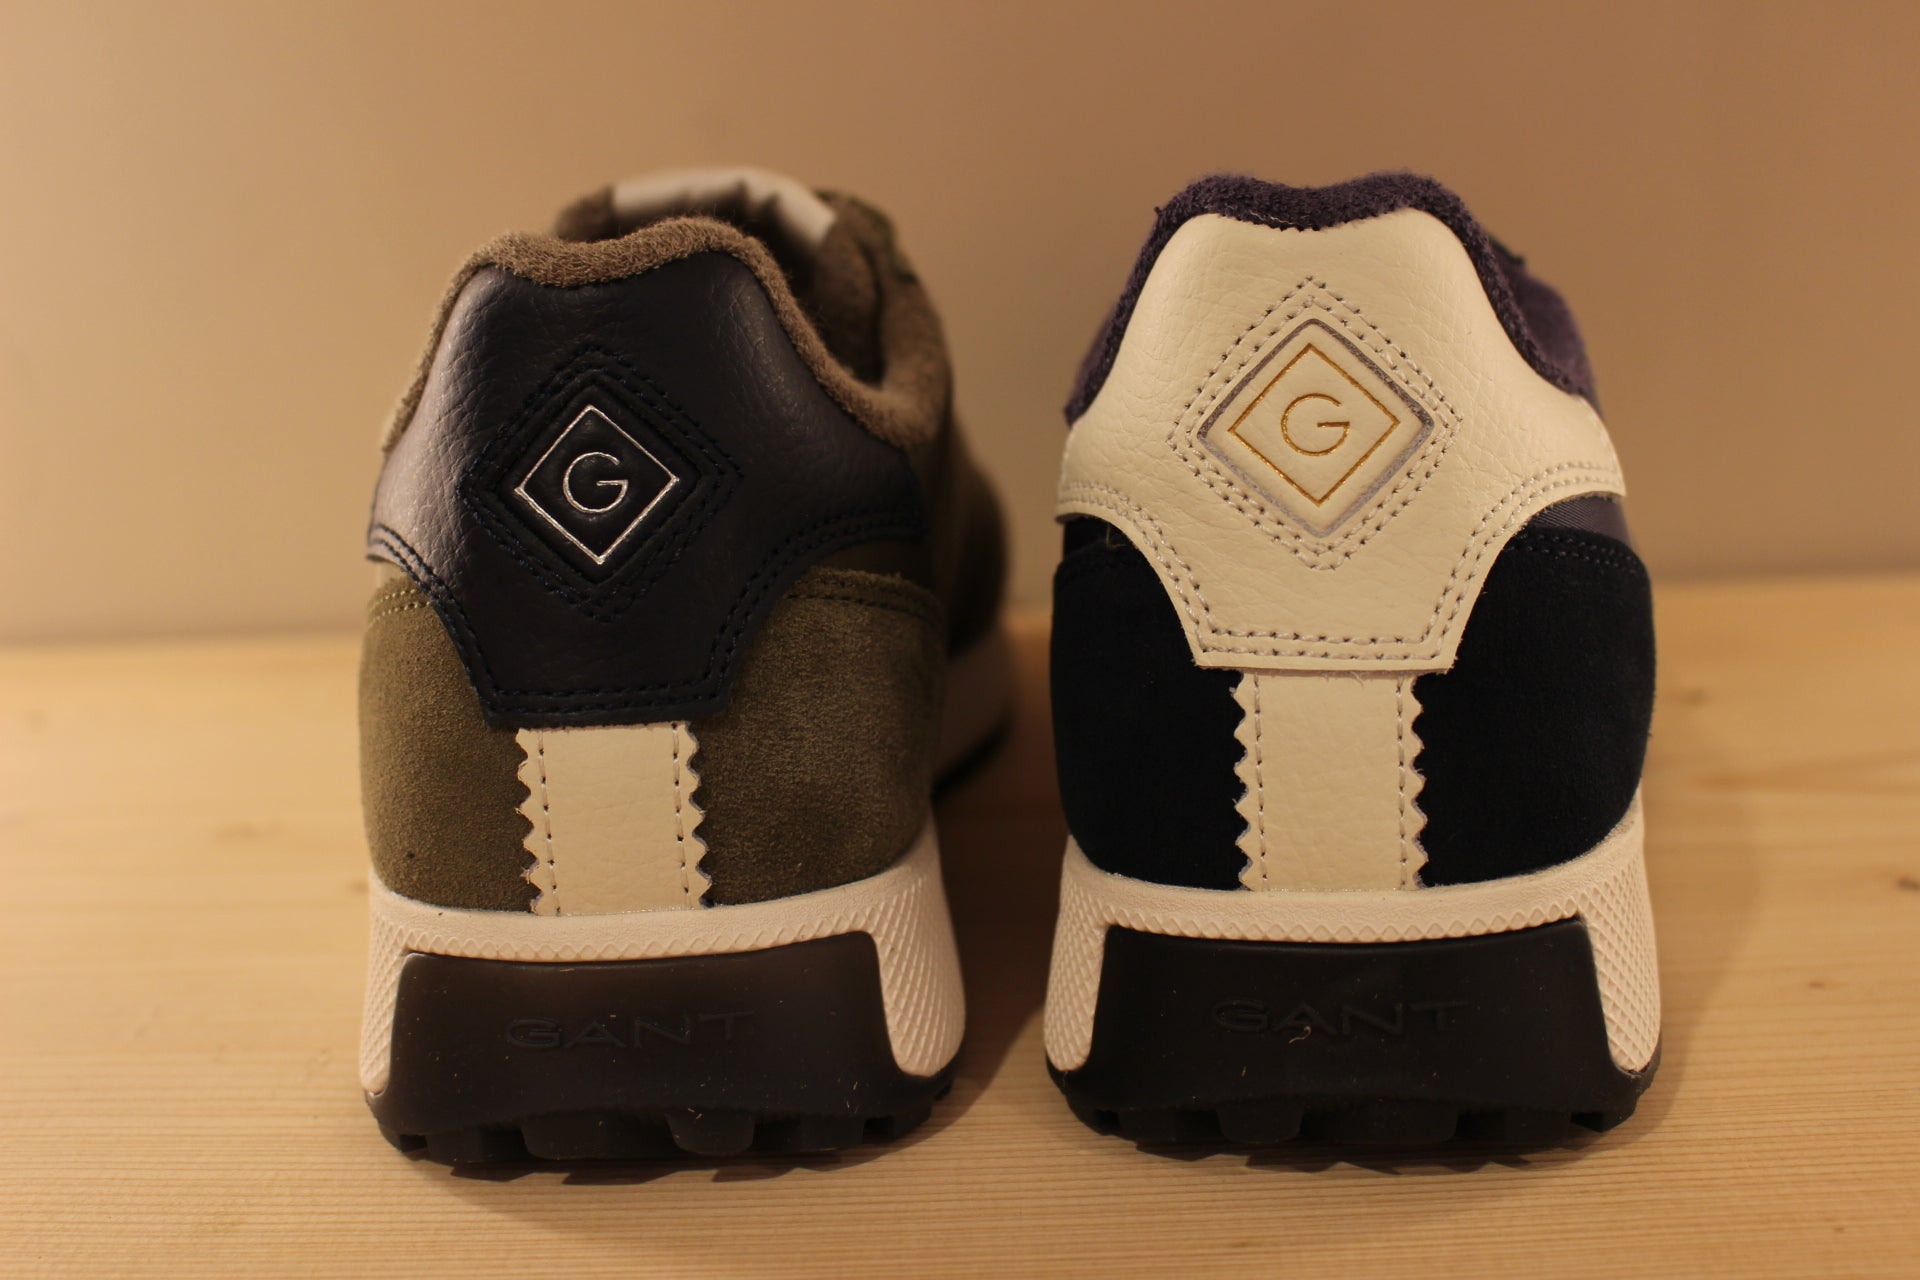 Sneaker cuir et nylon bleu marine ou kaki semelle amovible GANT marque New-Yorkaise